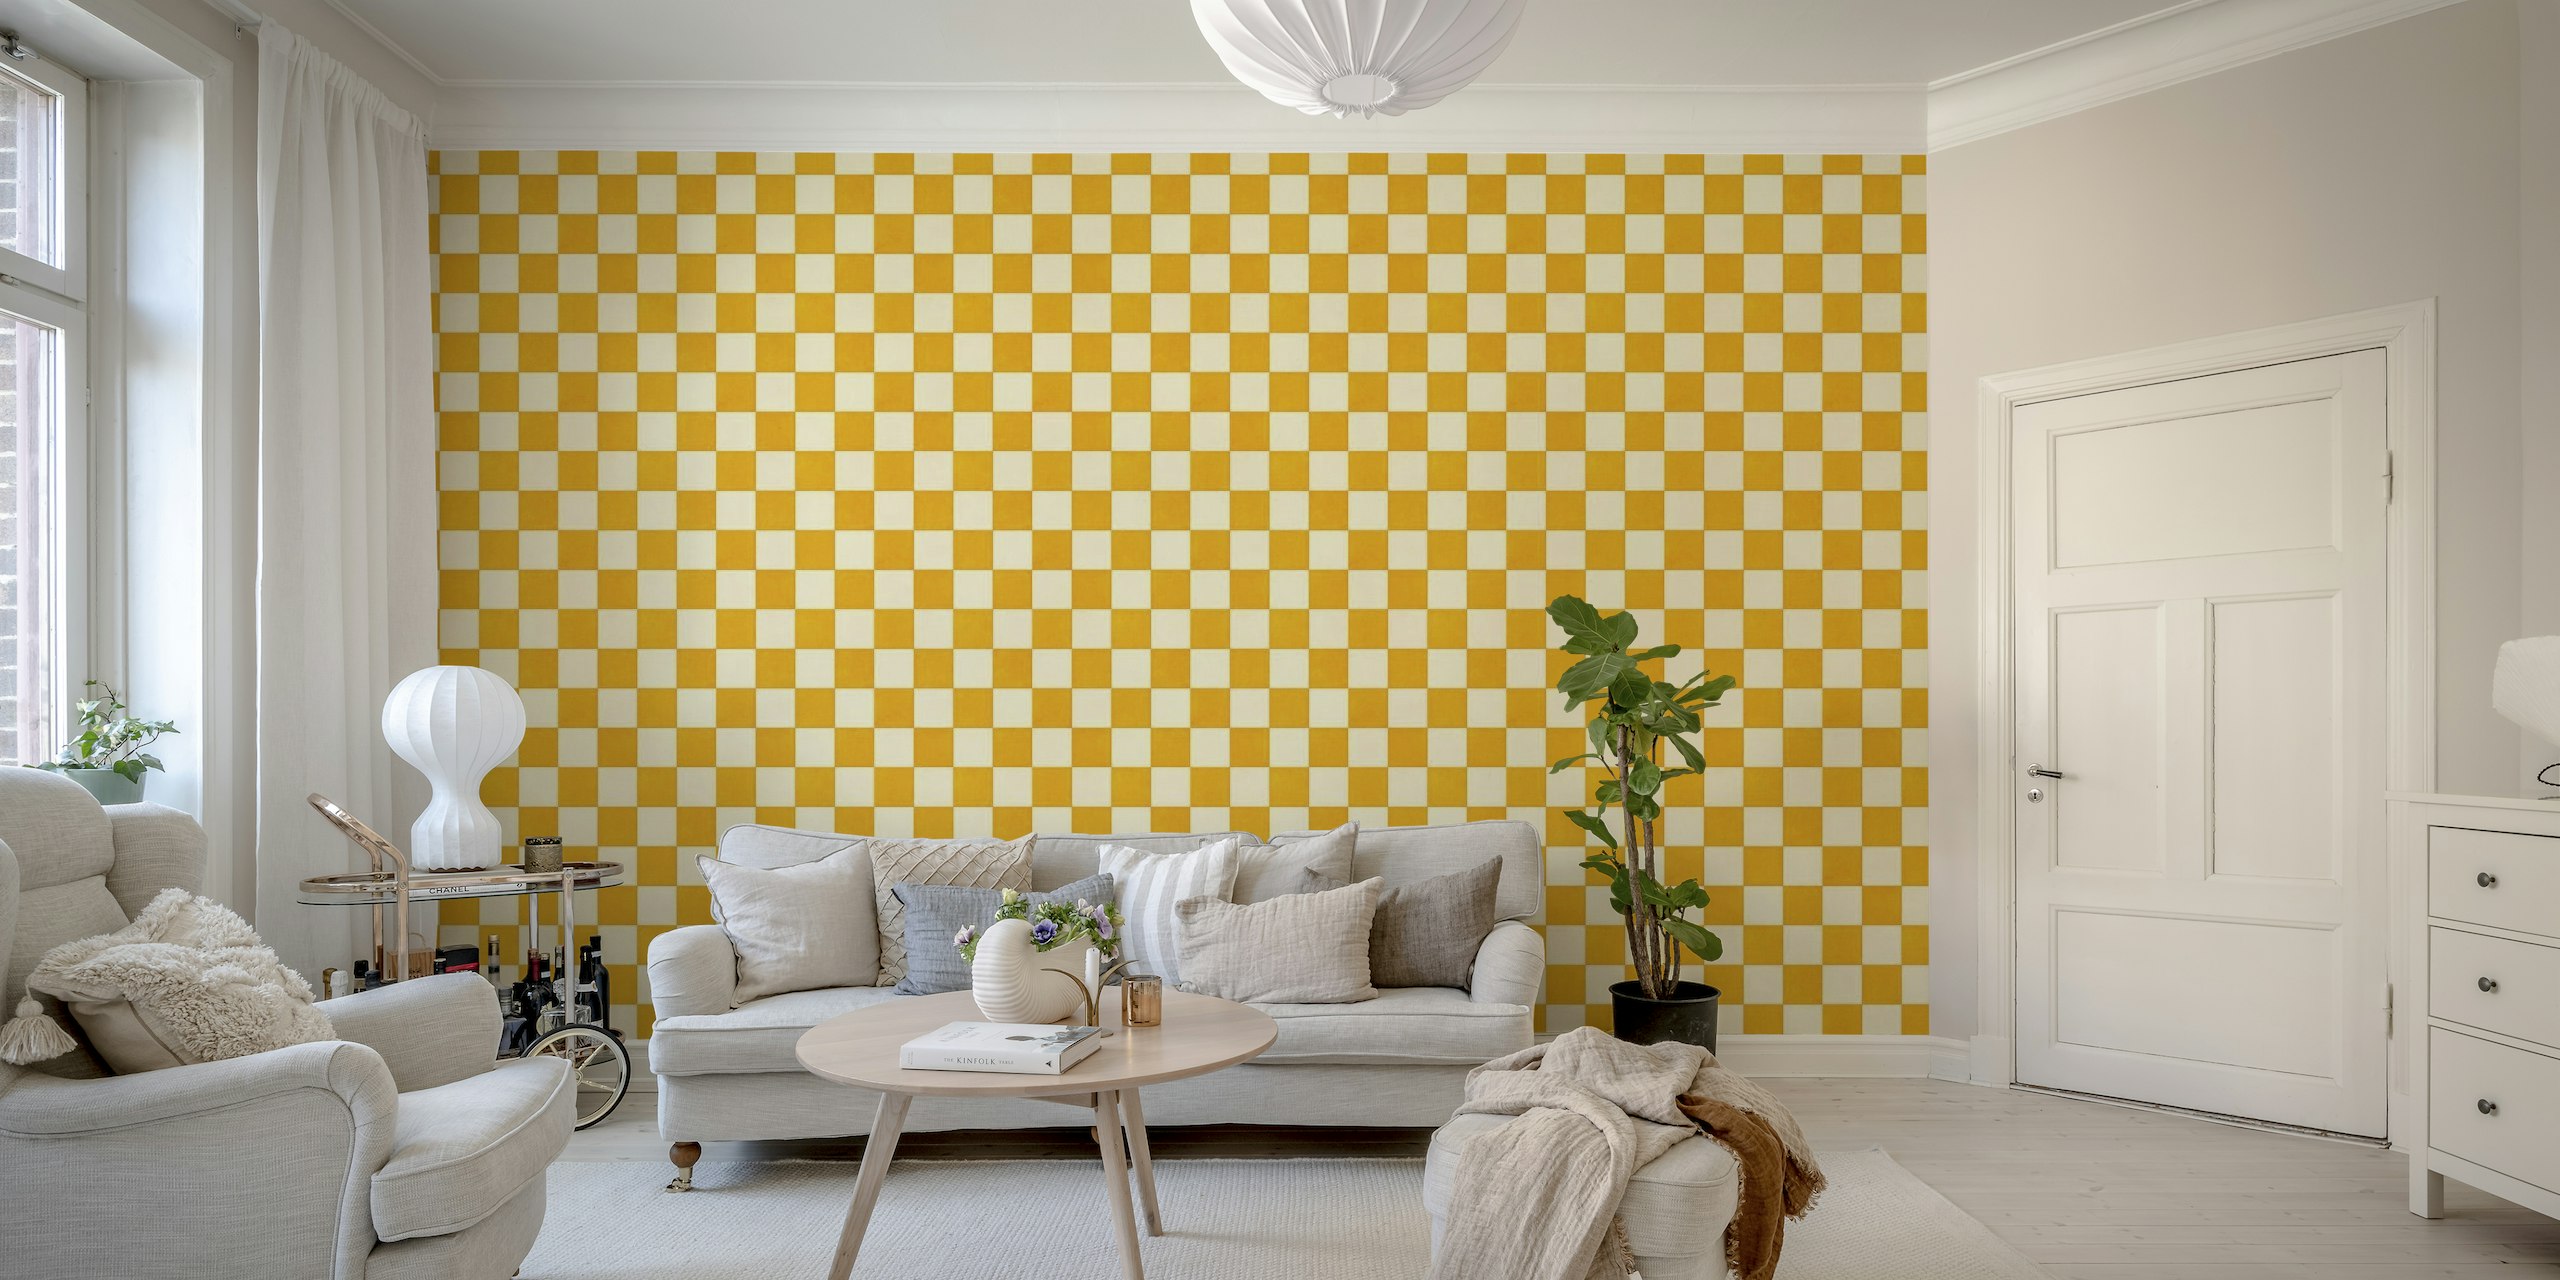 TILES 012 B - Checkerboard wallpaper